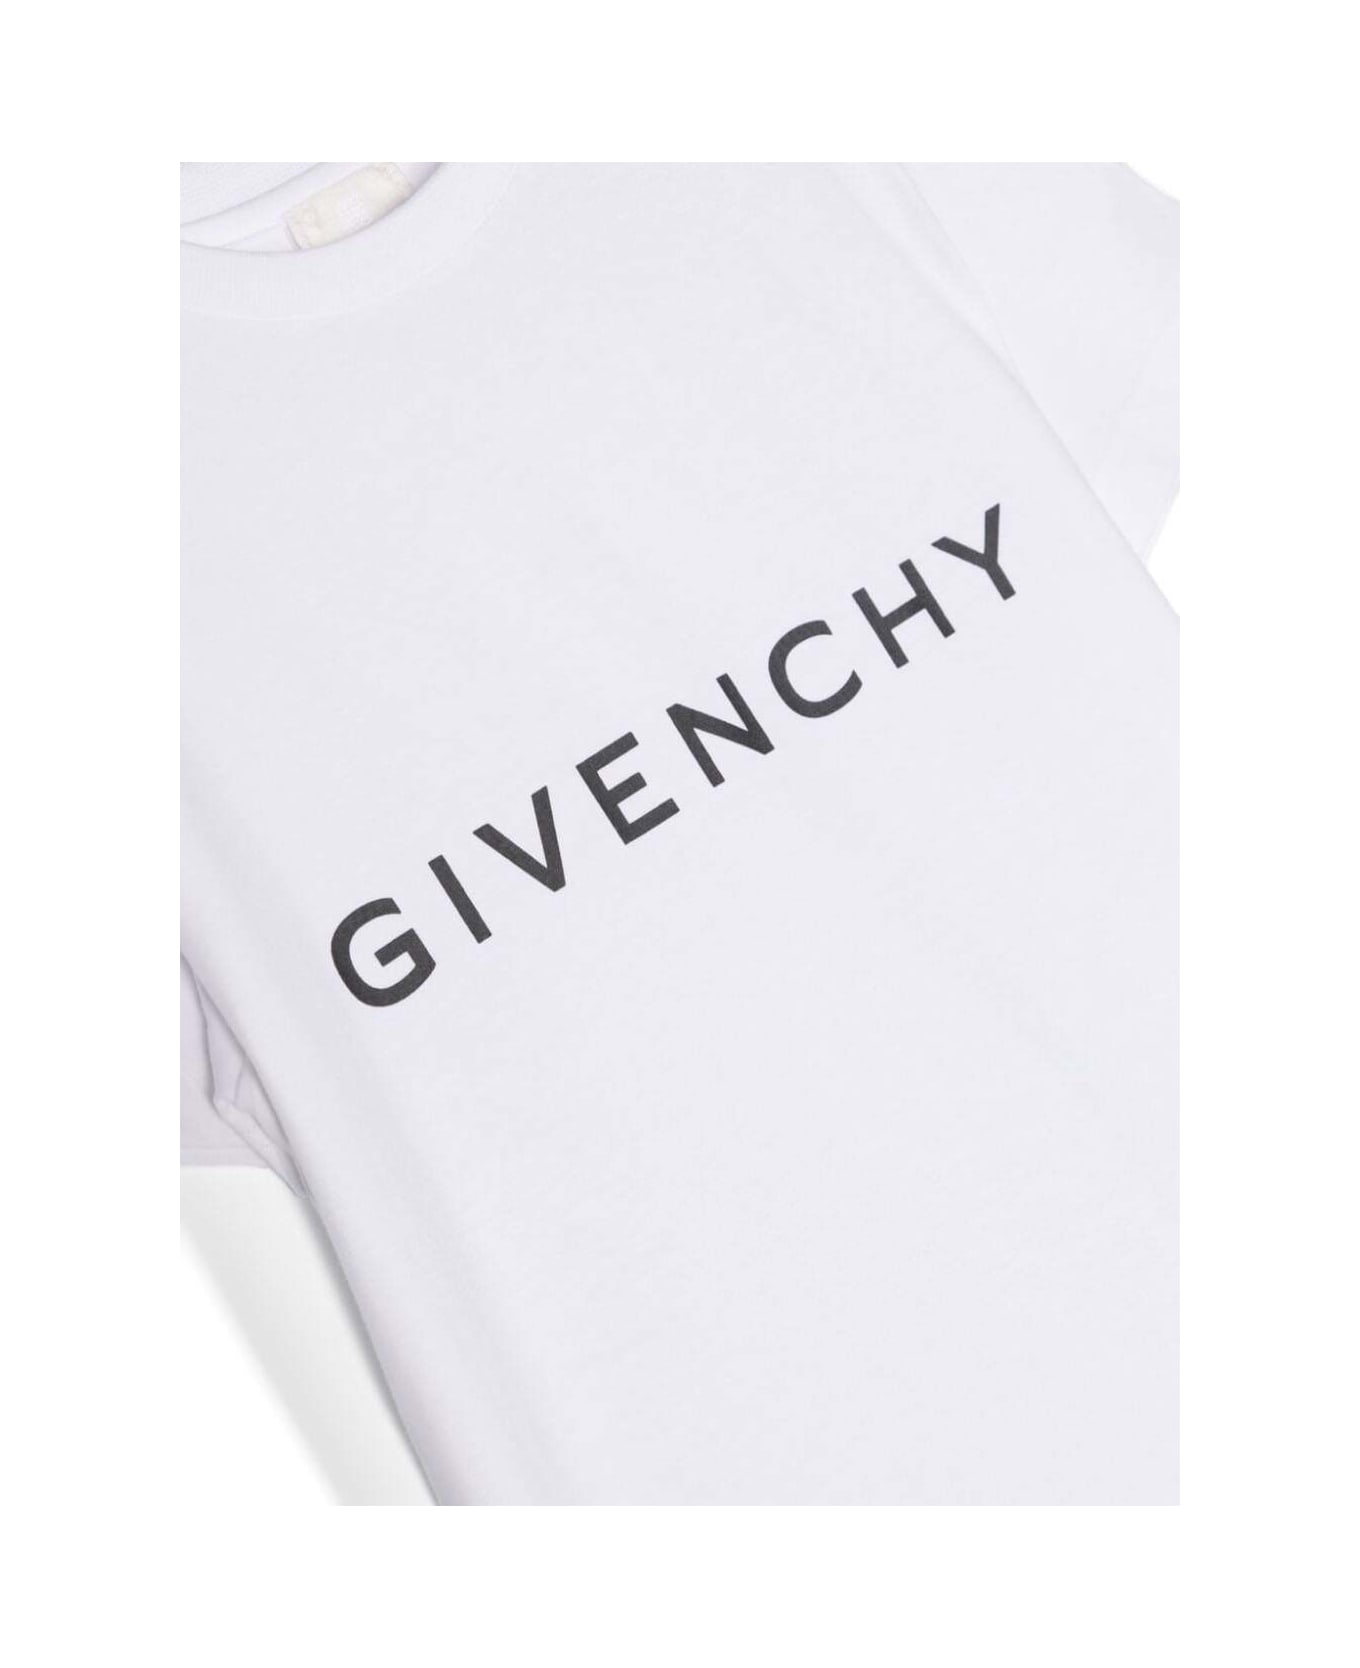 Givenchy H3015910p - P Bianco